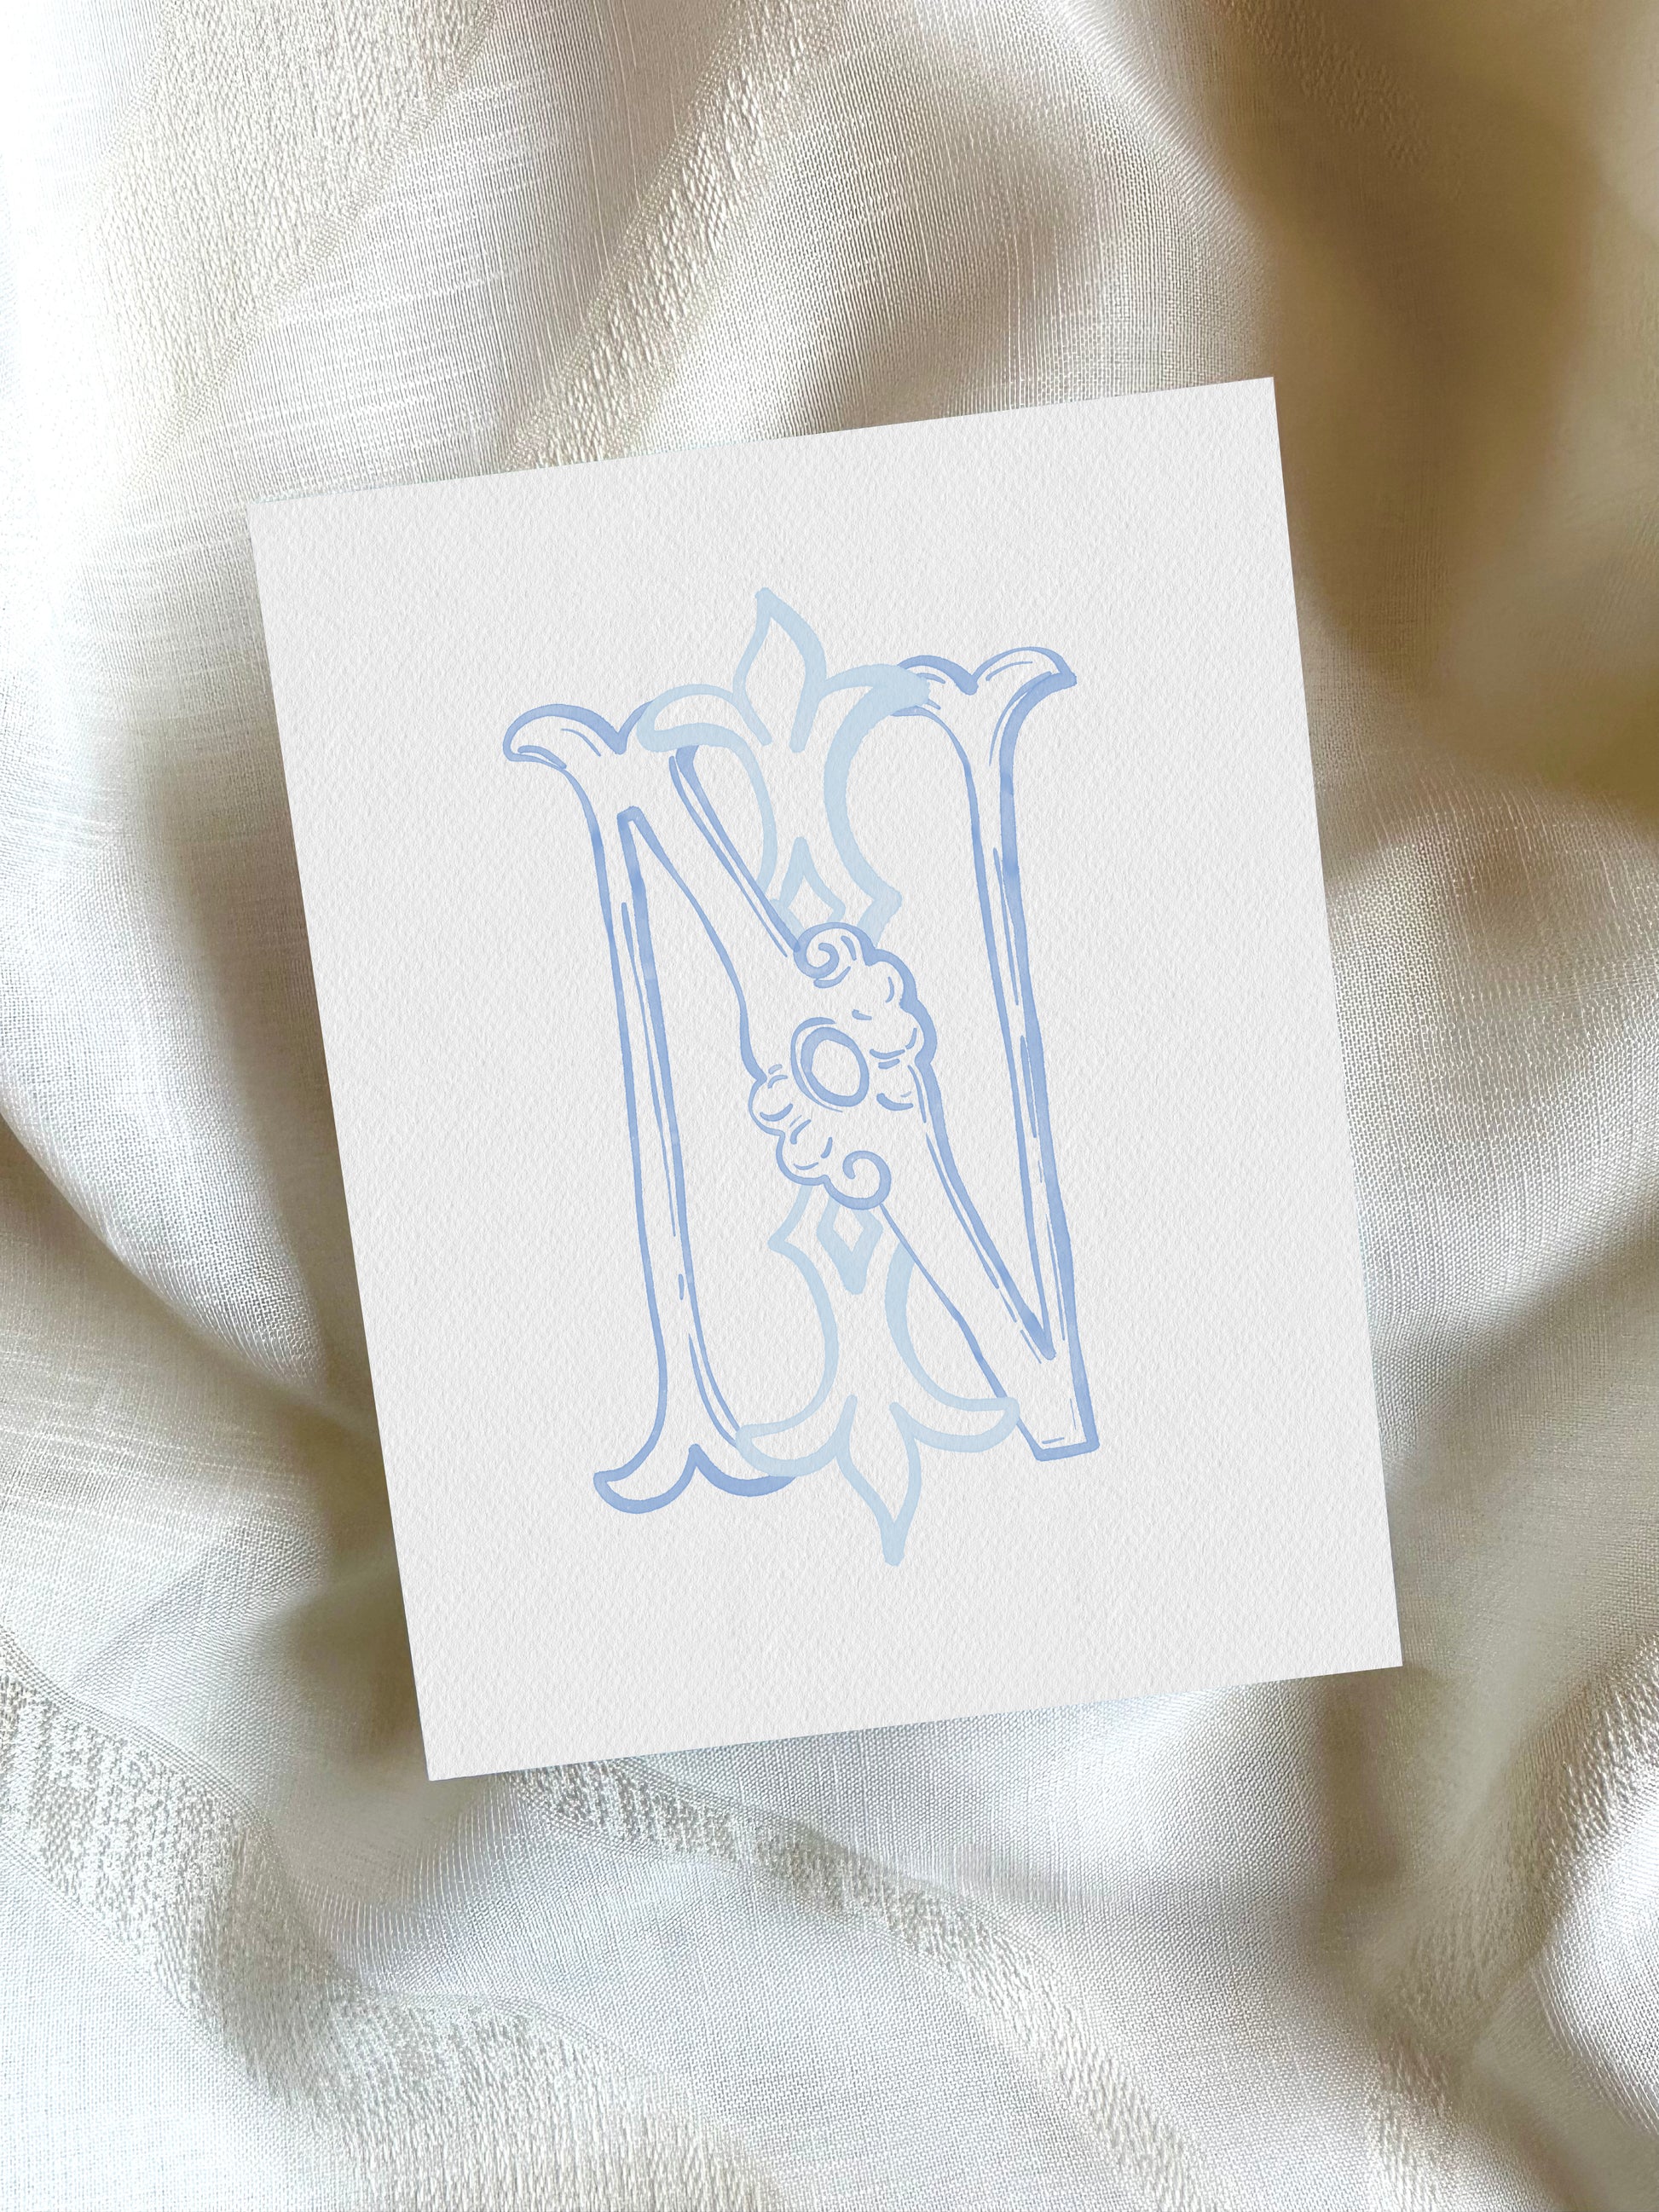 2 Letter Monogram with Letters IN NI | Digital Download - Wedding Monogram SVG, Personal Logo, Wedding Logo for Wedding Invitations The Wedding Crest Lab